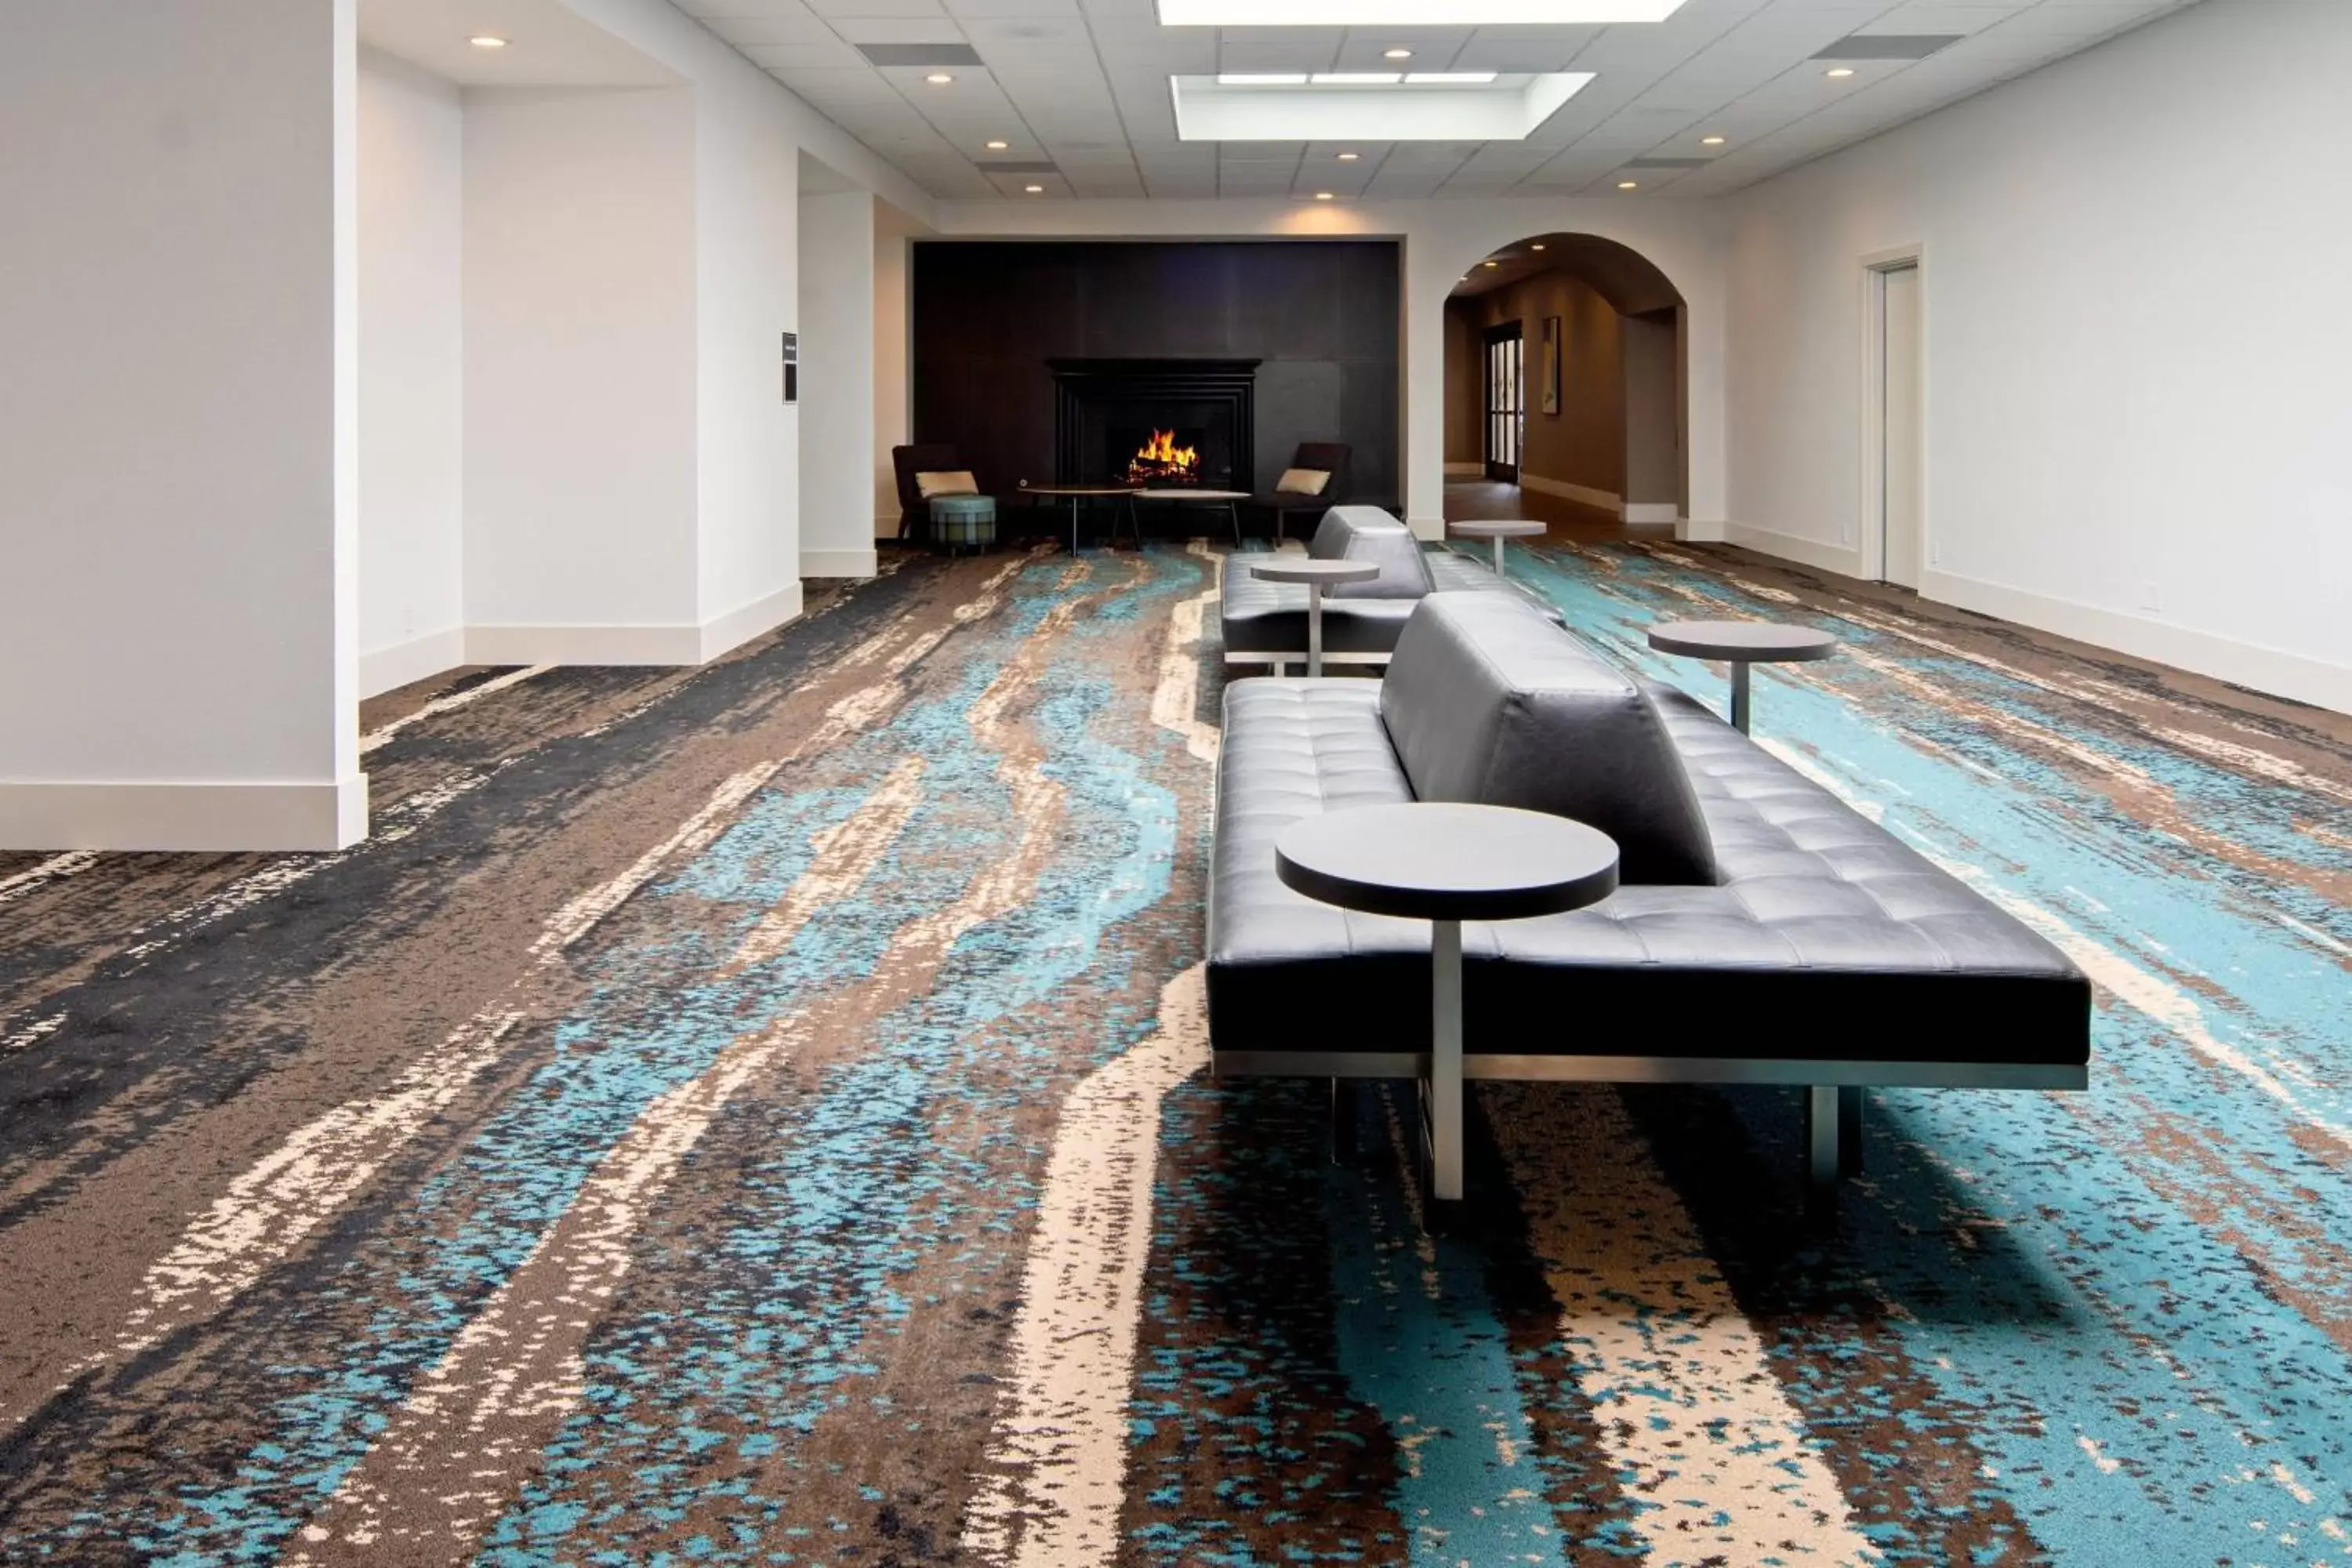 Meeting/conference room in Residence Inn by Marriott Oxnard River Ridge